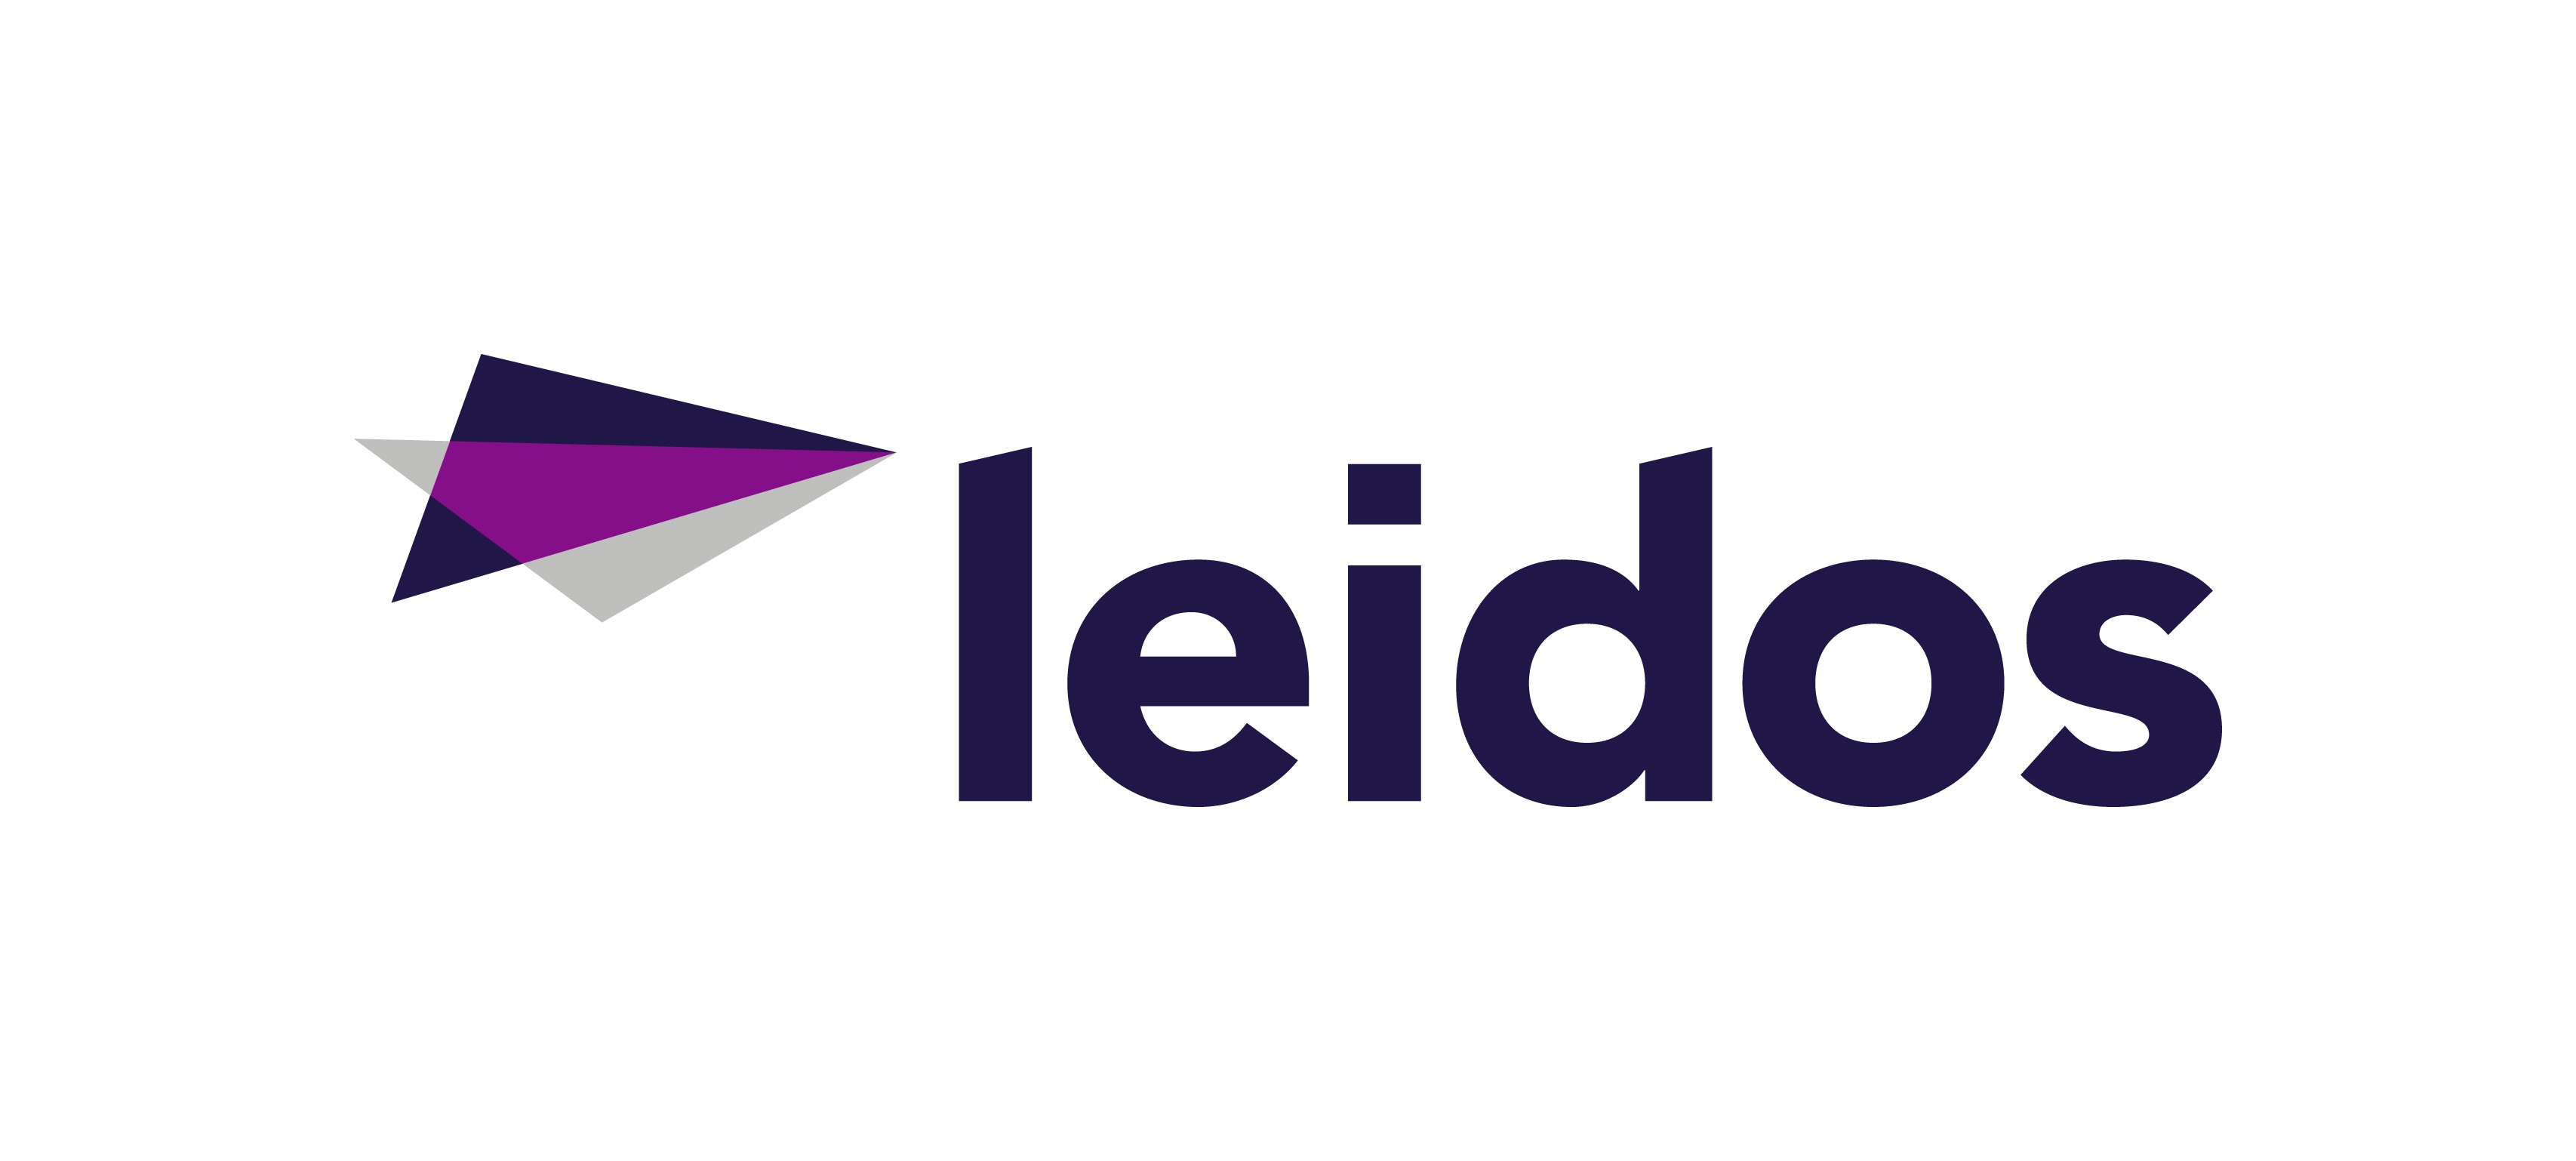 00197 Leidos Industrial Engineers Limited logo